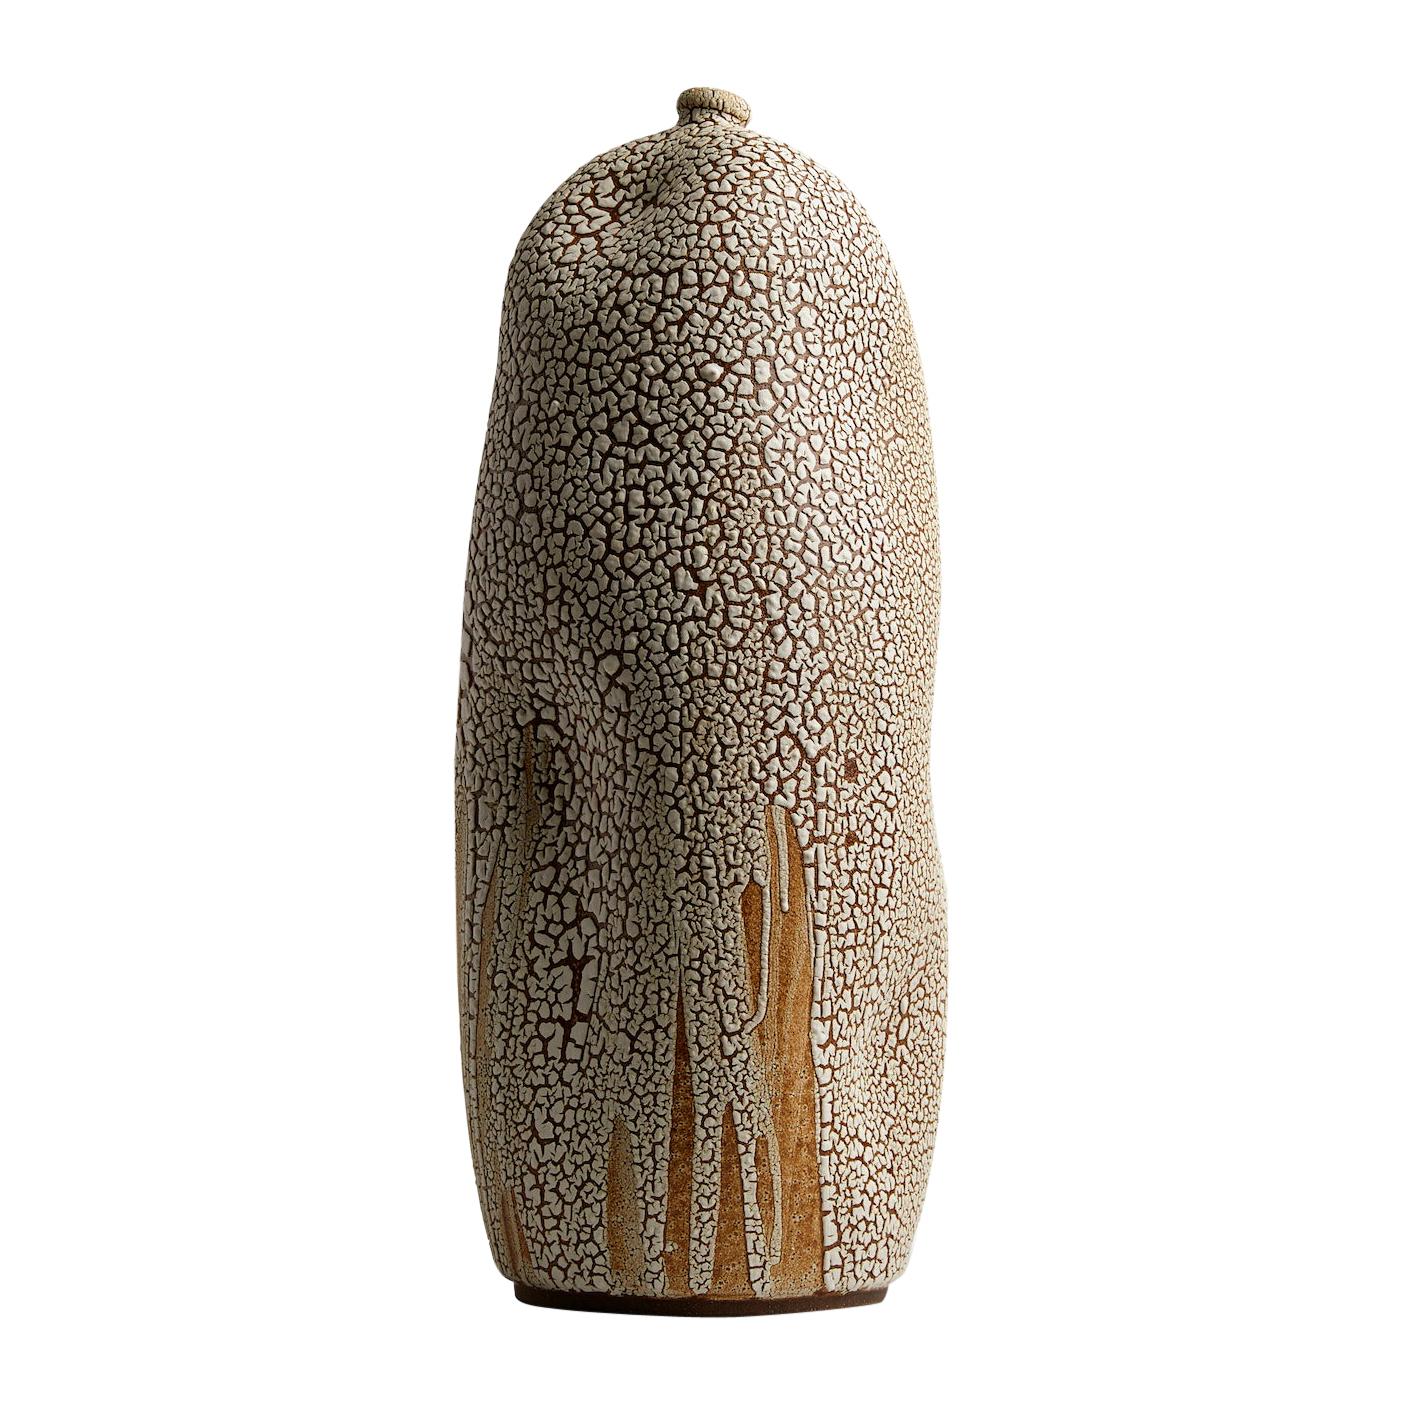 White Tall Textured Handmade Ceramic Vase / Wabi Sabi Interior Sculpture